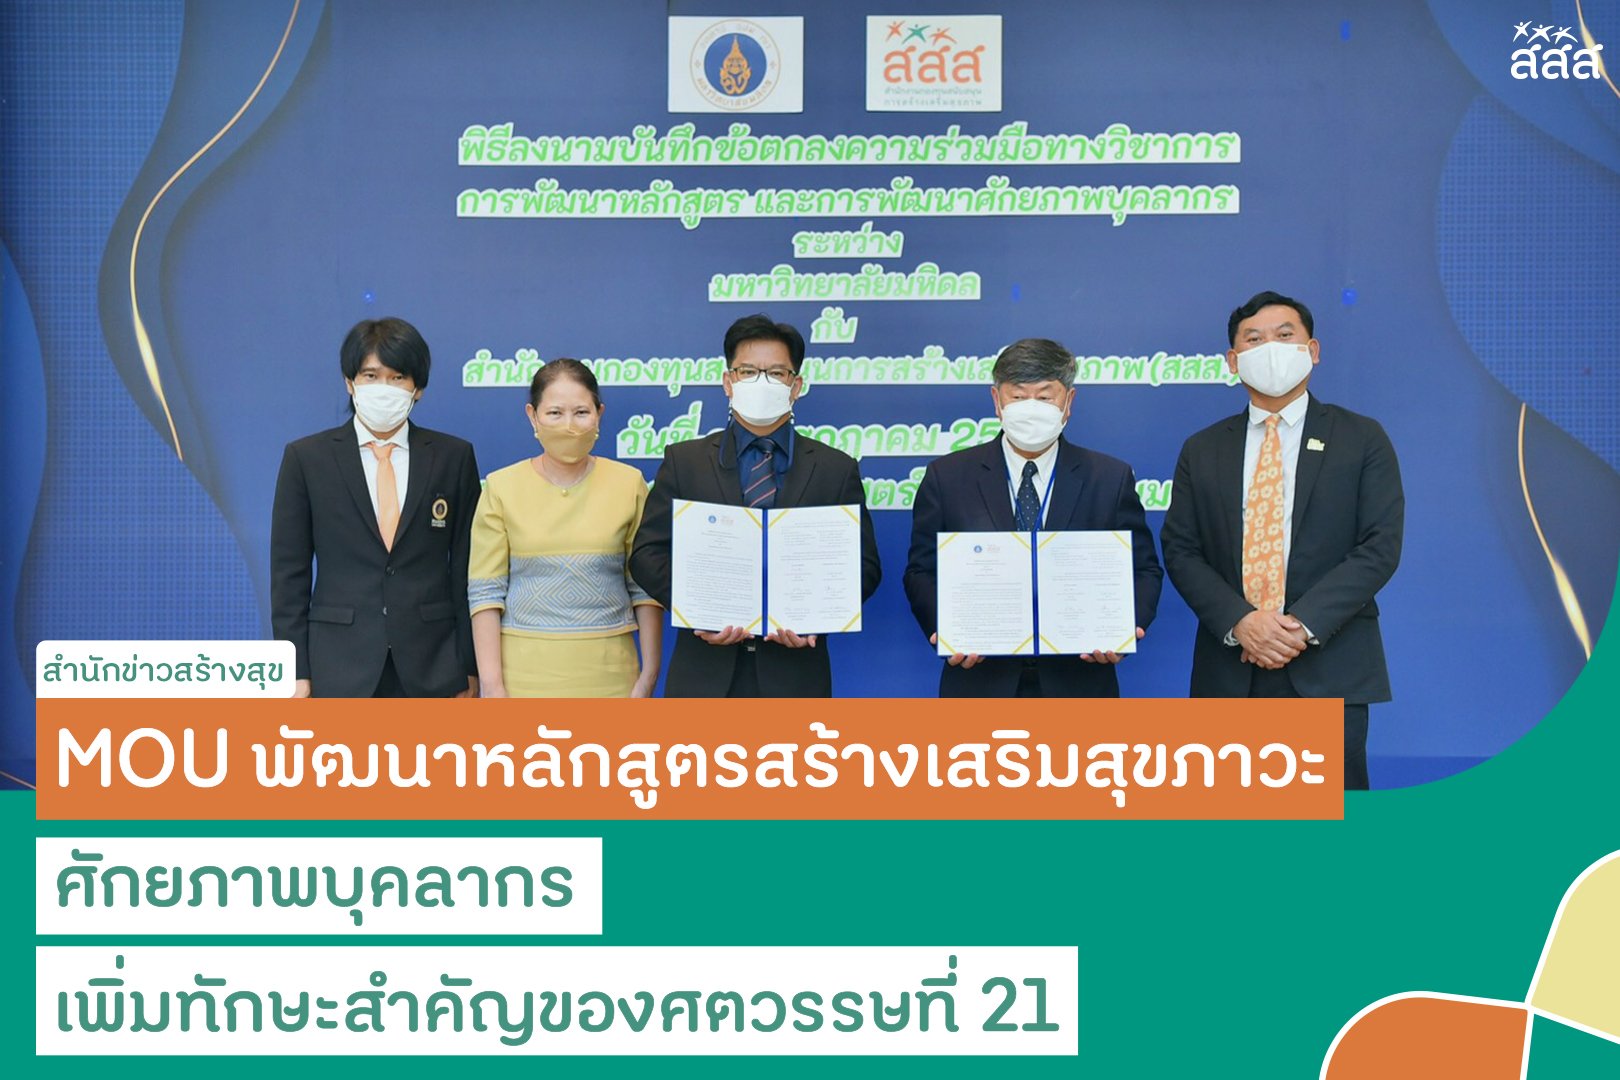 MOU พัฒนาหลักสูตรสร้างเสริมสุขภาวะ ศักยภาพบุคลากร เพิ่มทักษะสำคัญของศตวรรษที่ 21 thaihealth